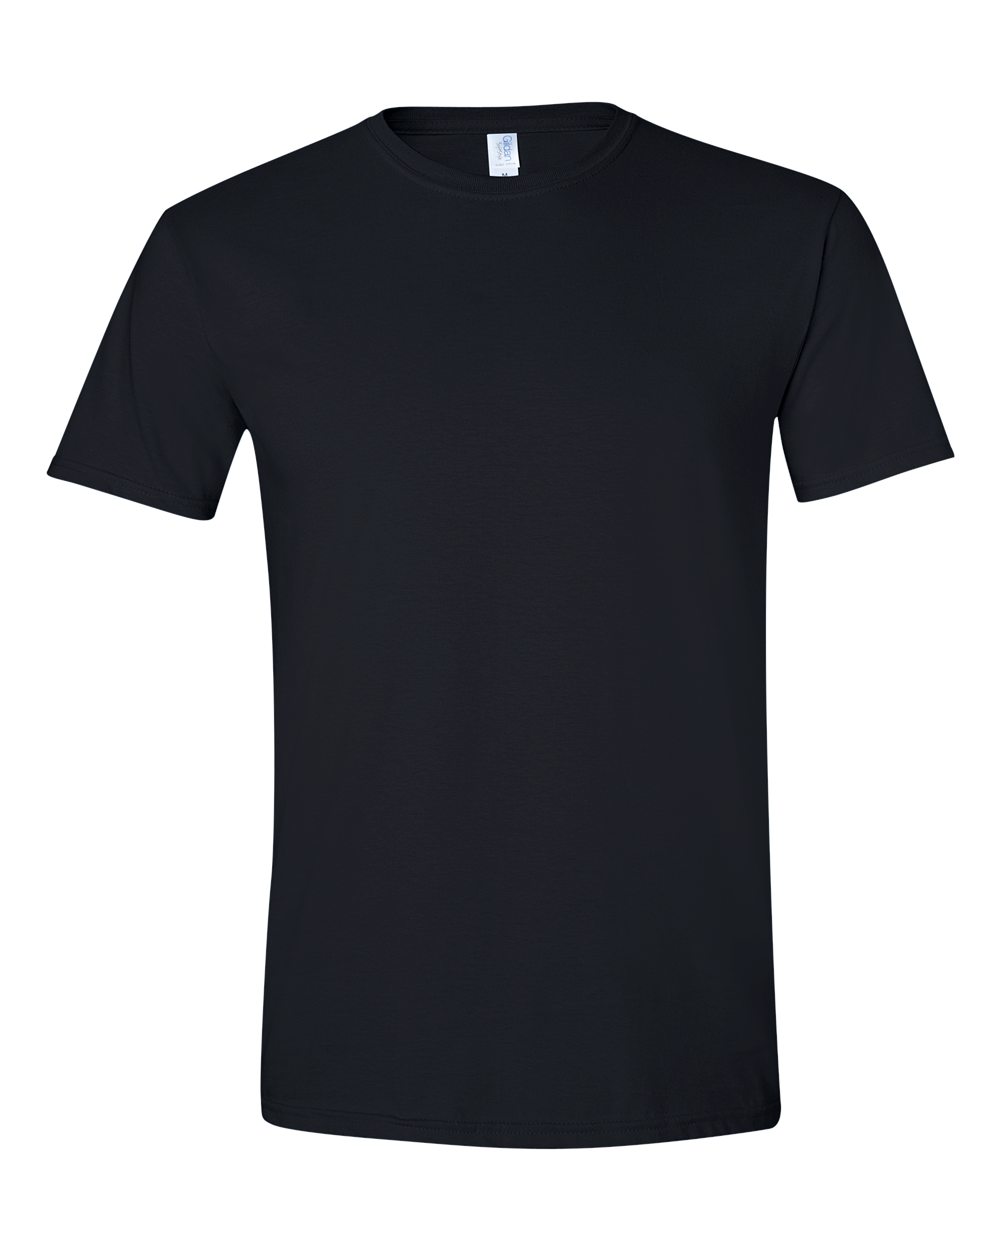 Gildan Softstyle Tshirt - Black